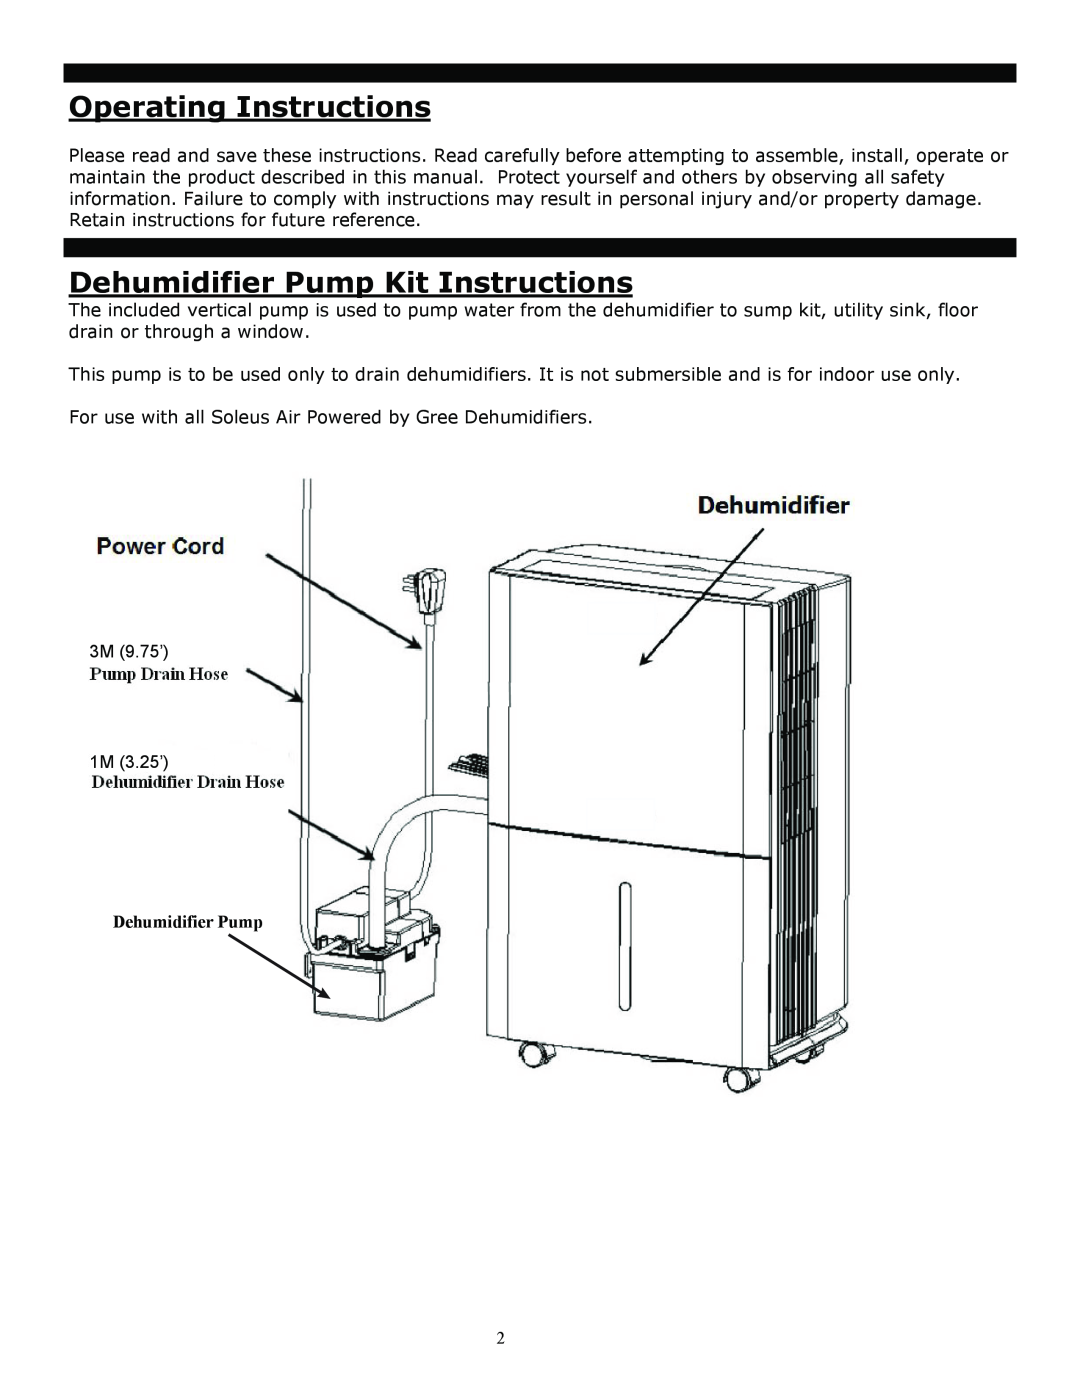 Soleus Air 1M, 3M manual Operating Instructions, Dehumidifier Pump Kit Instructions 